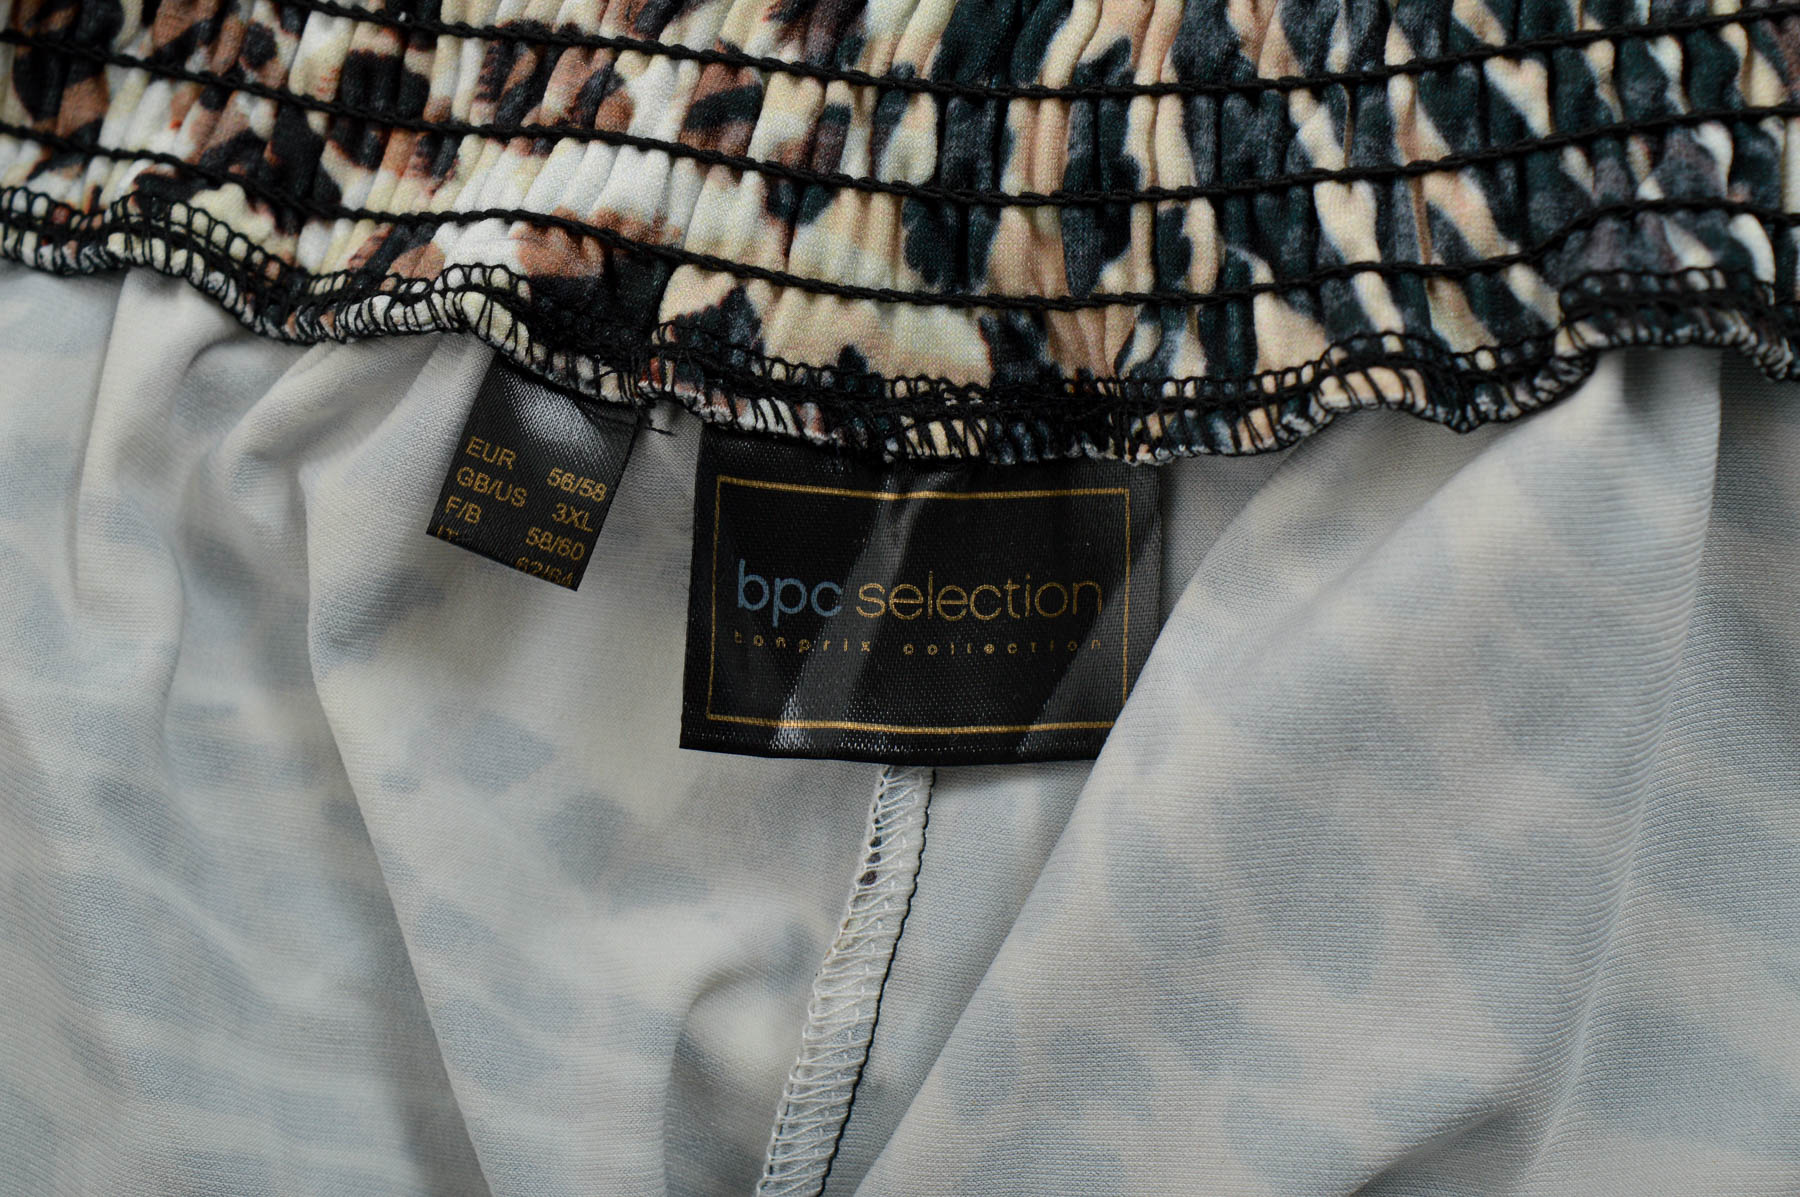 Women's trousers - Bpc selection bonprix collection - 2